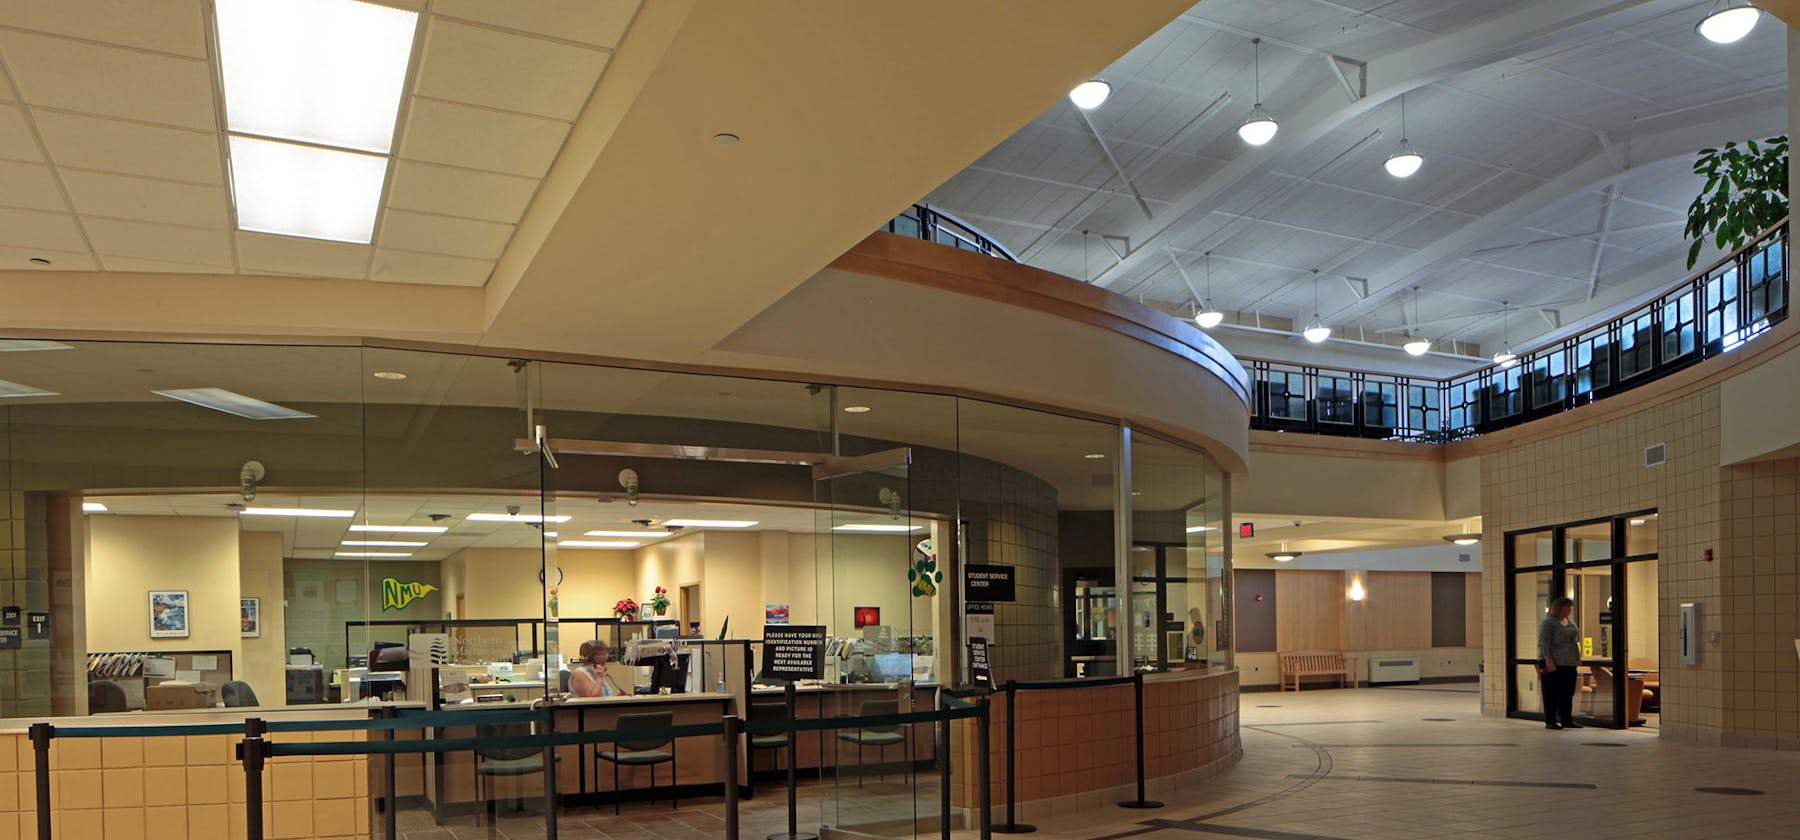 NMU Student Service Center interior